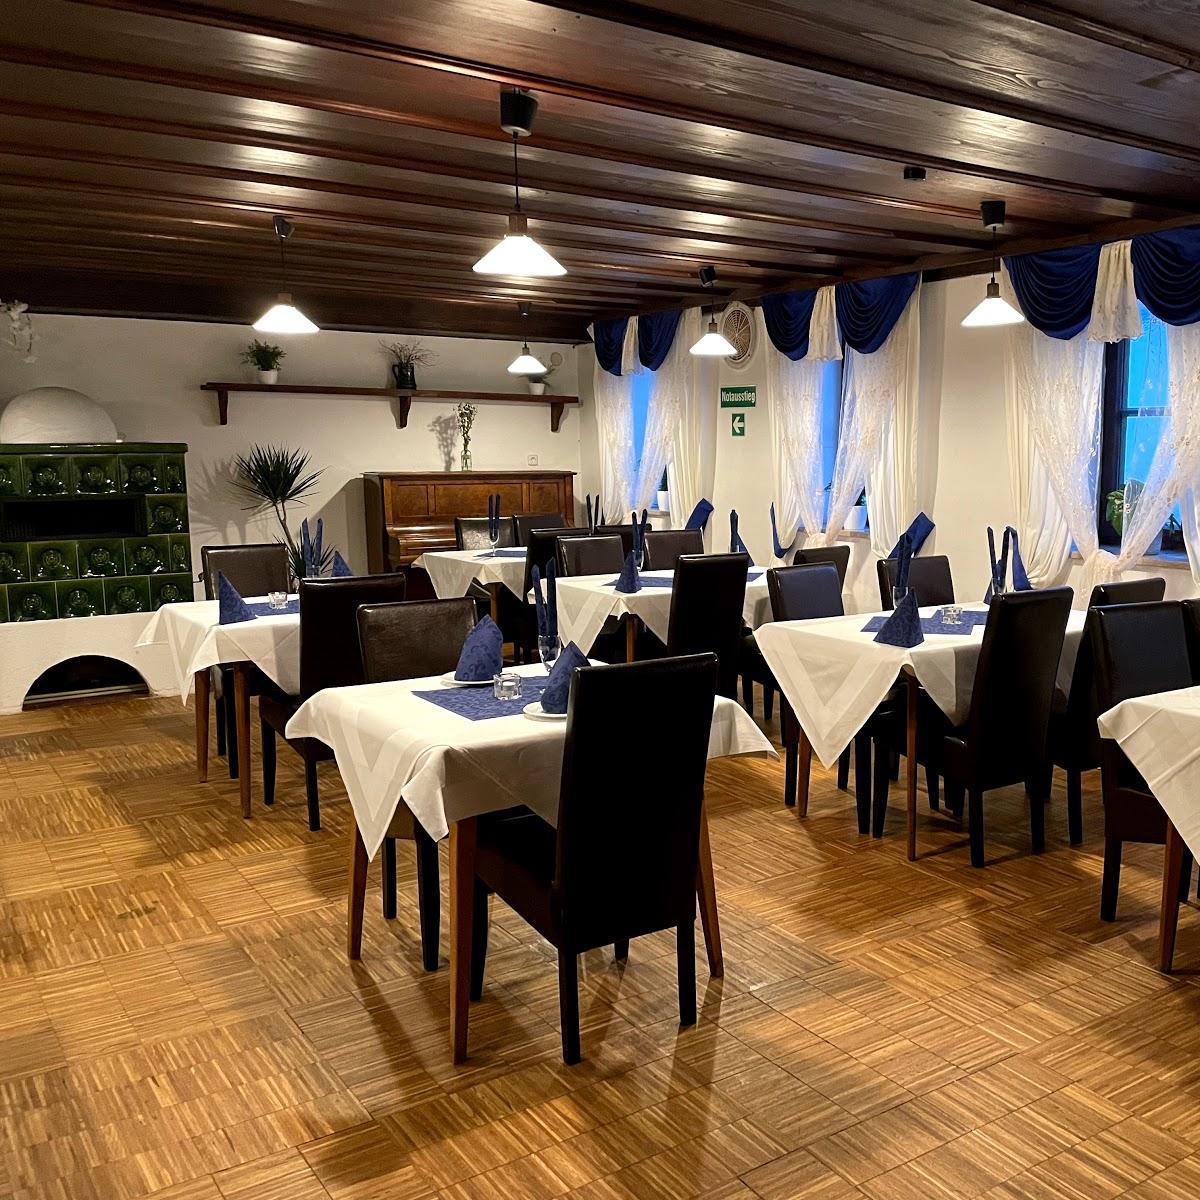 Restaurant "Maharaja - Authentic Indian Cuisine" in Adlkofen